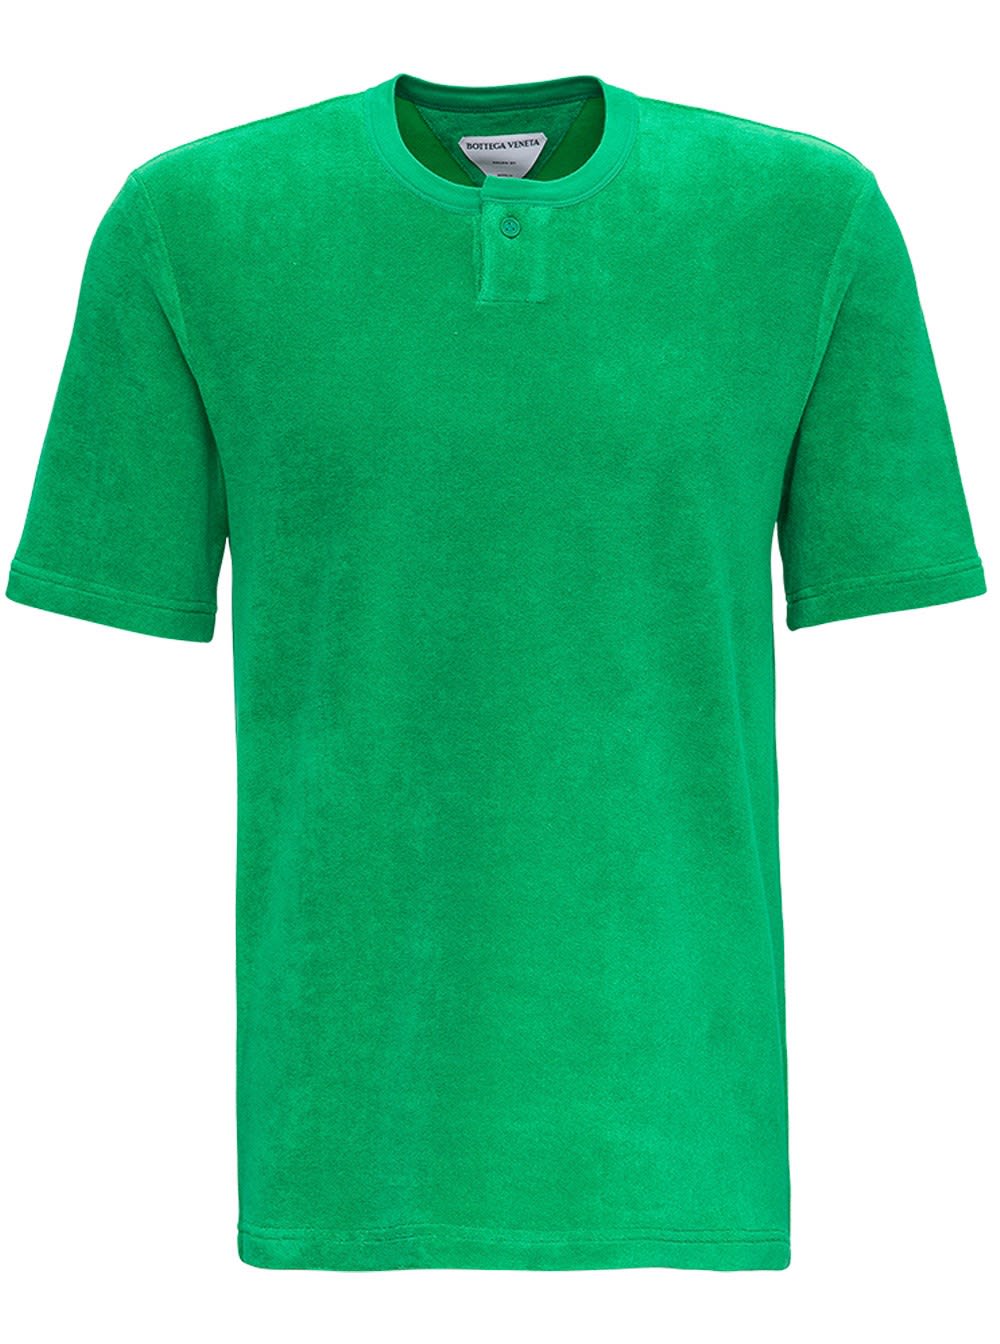 Bottega Veneta Green Terry Cloth T-shirt